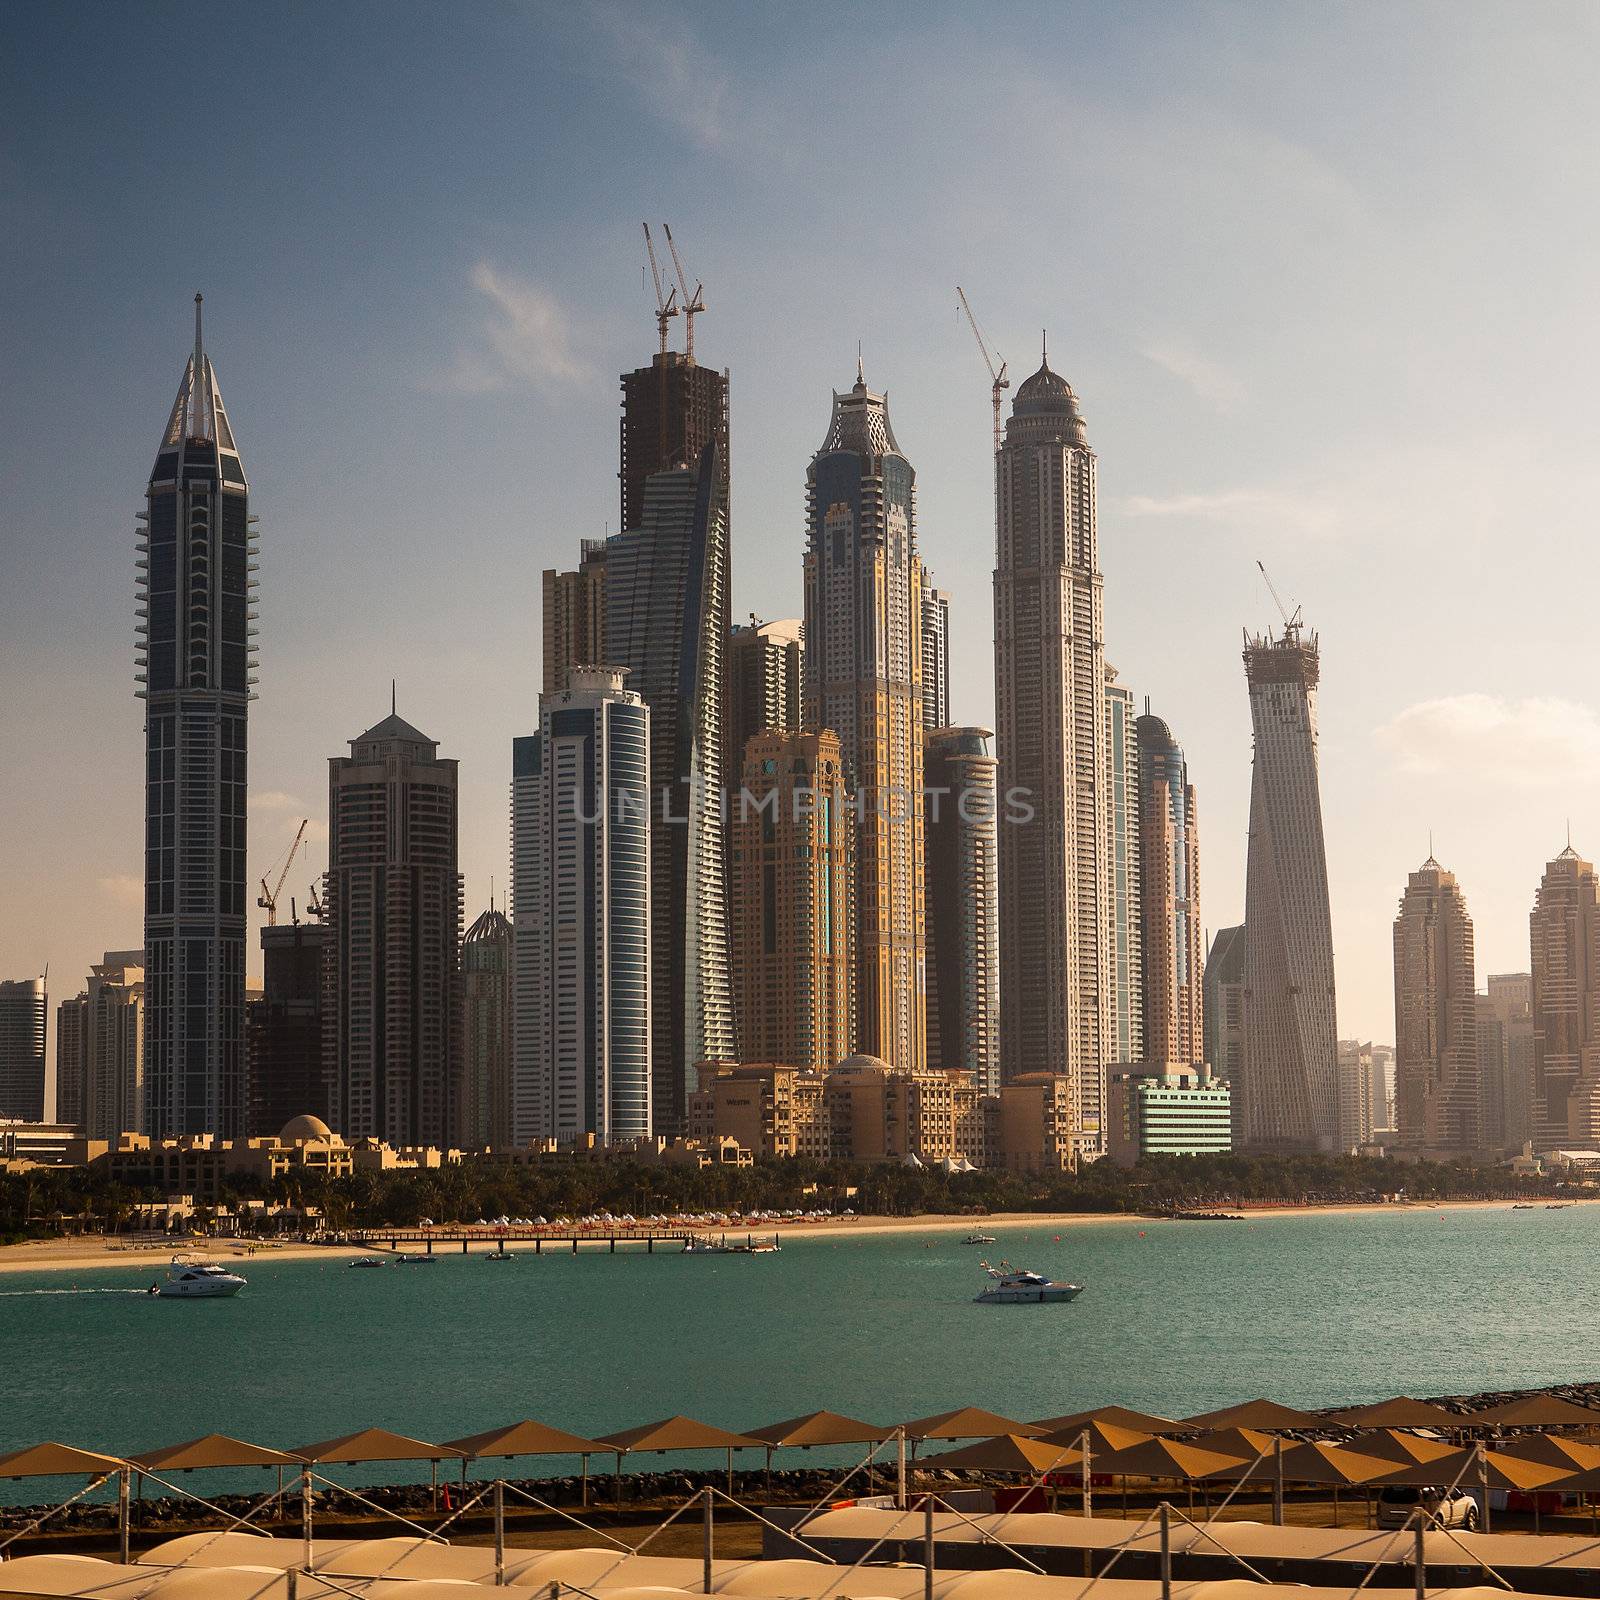 Skyscrapers in Dubai by CaptureLight